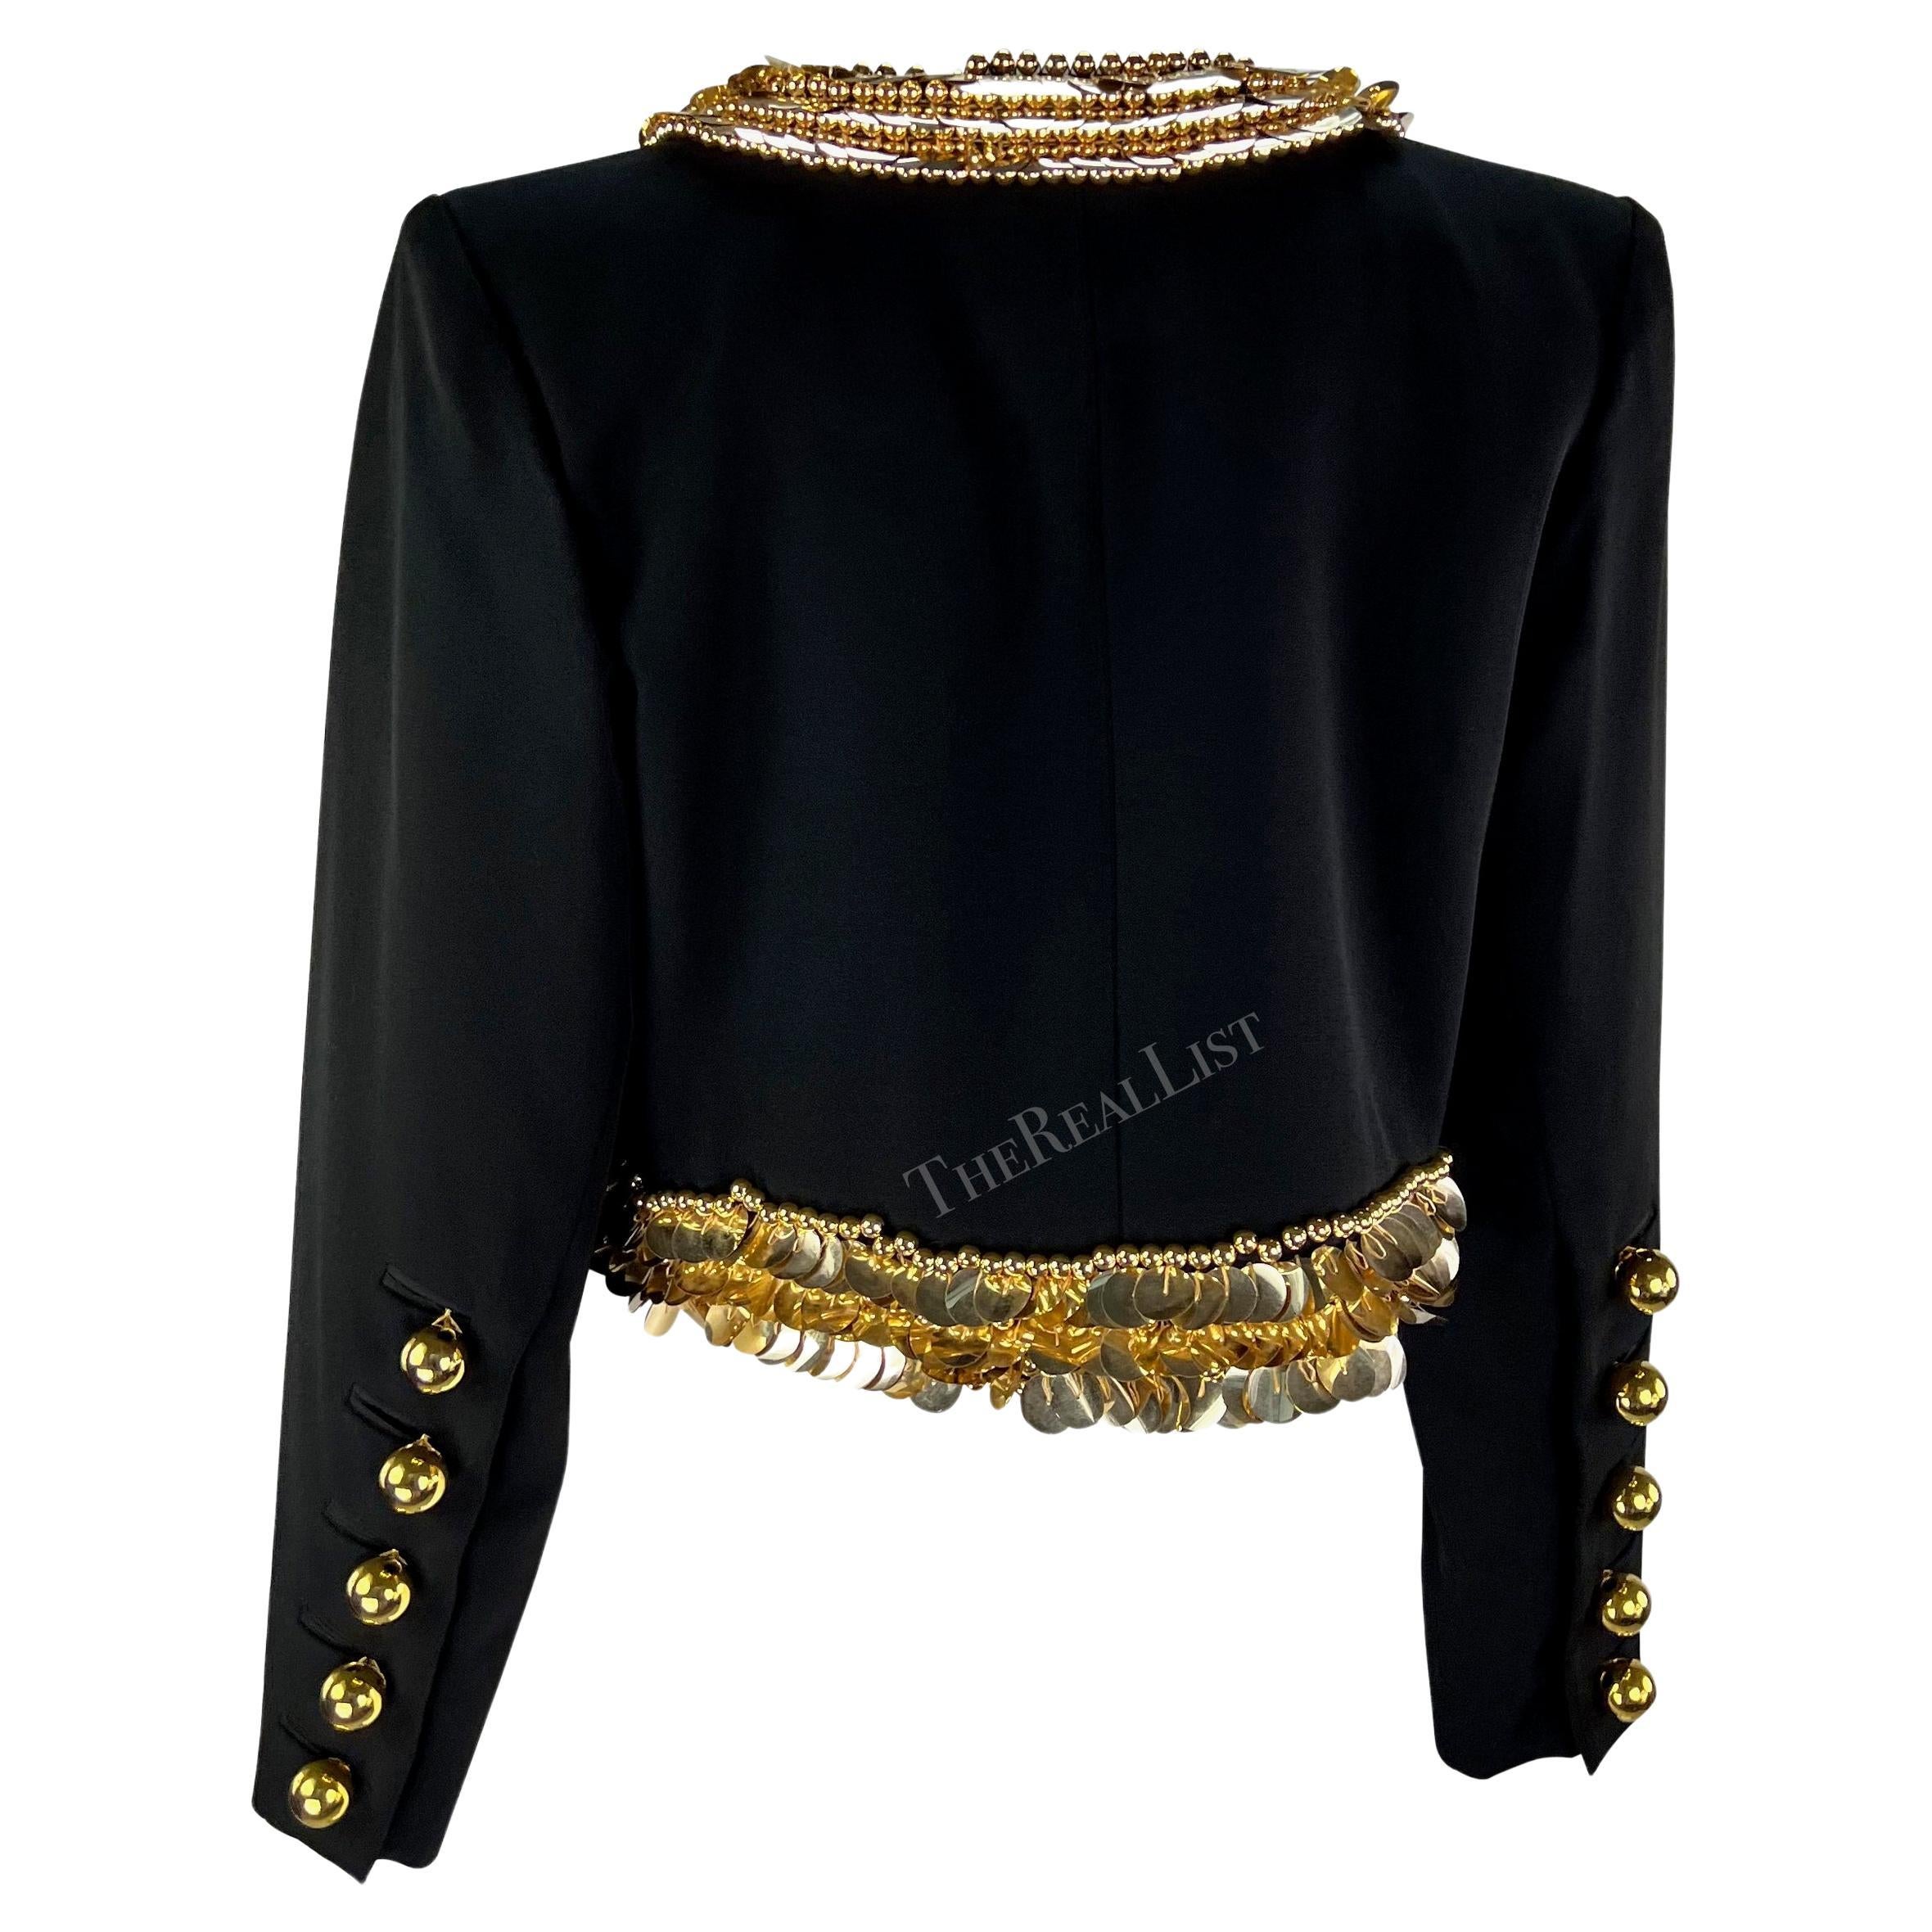 S/S 1990 Yves Saint Laurent Runway Ad Black Cropped Gold Embellished Jacket For Sale 4